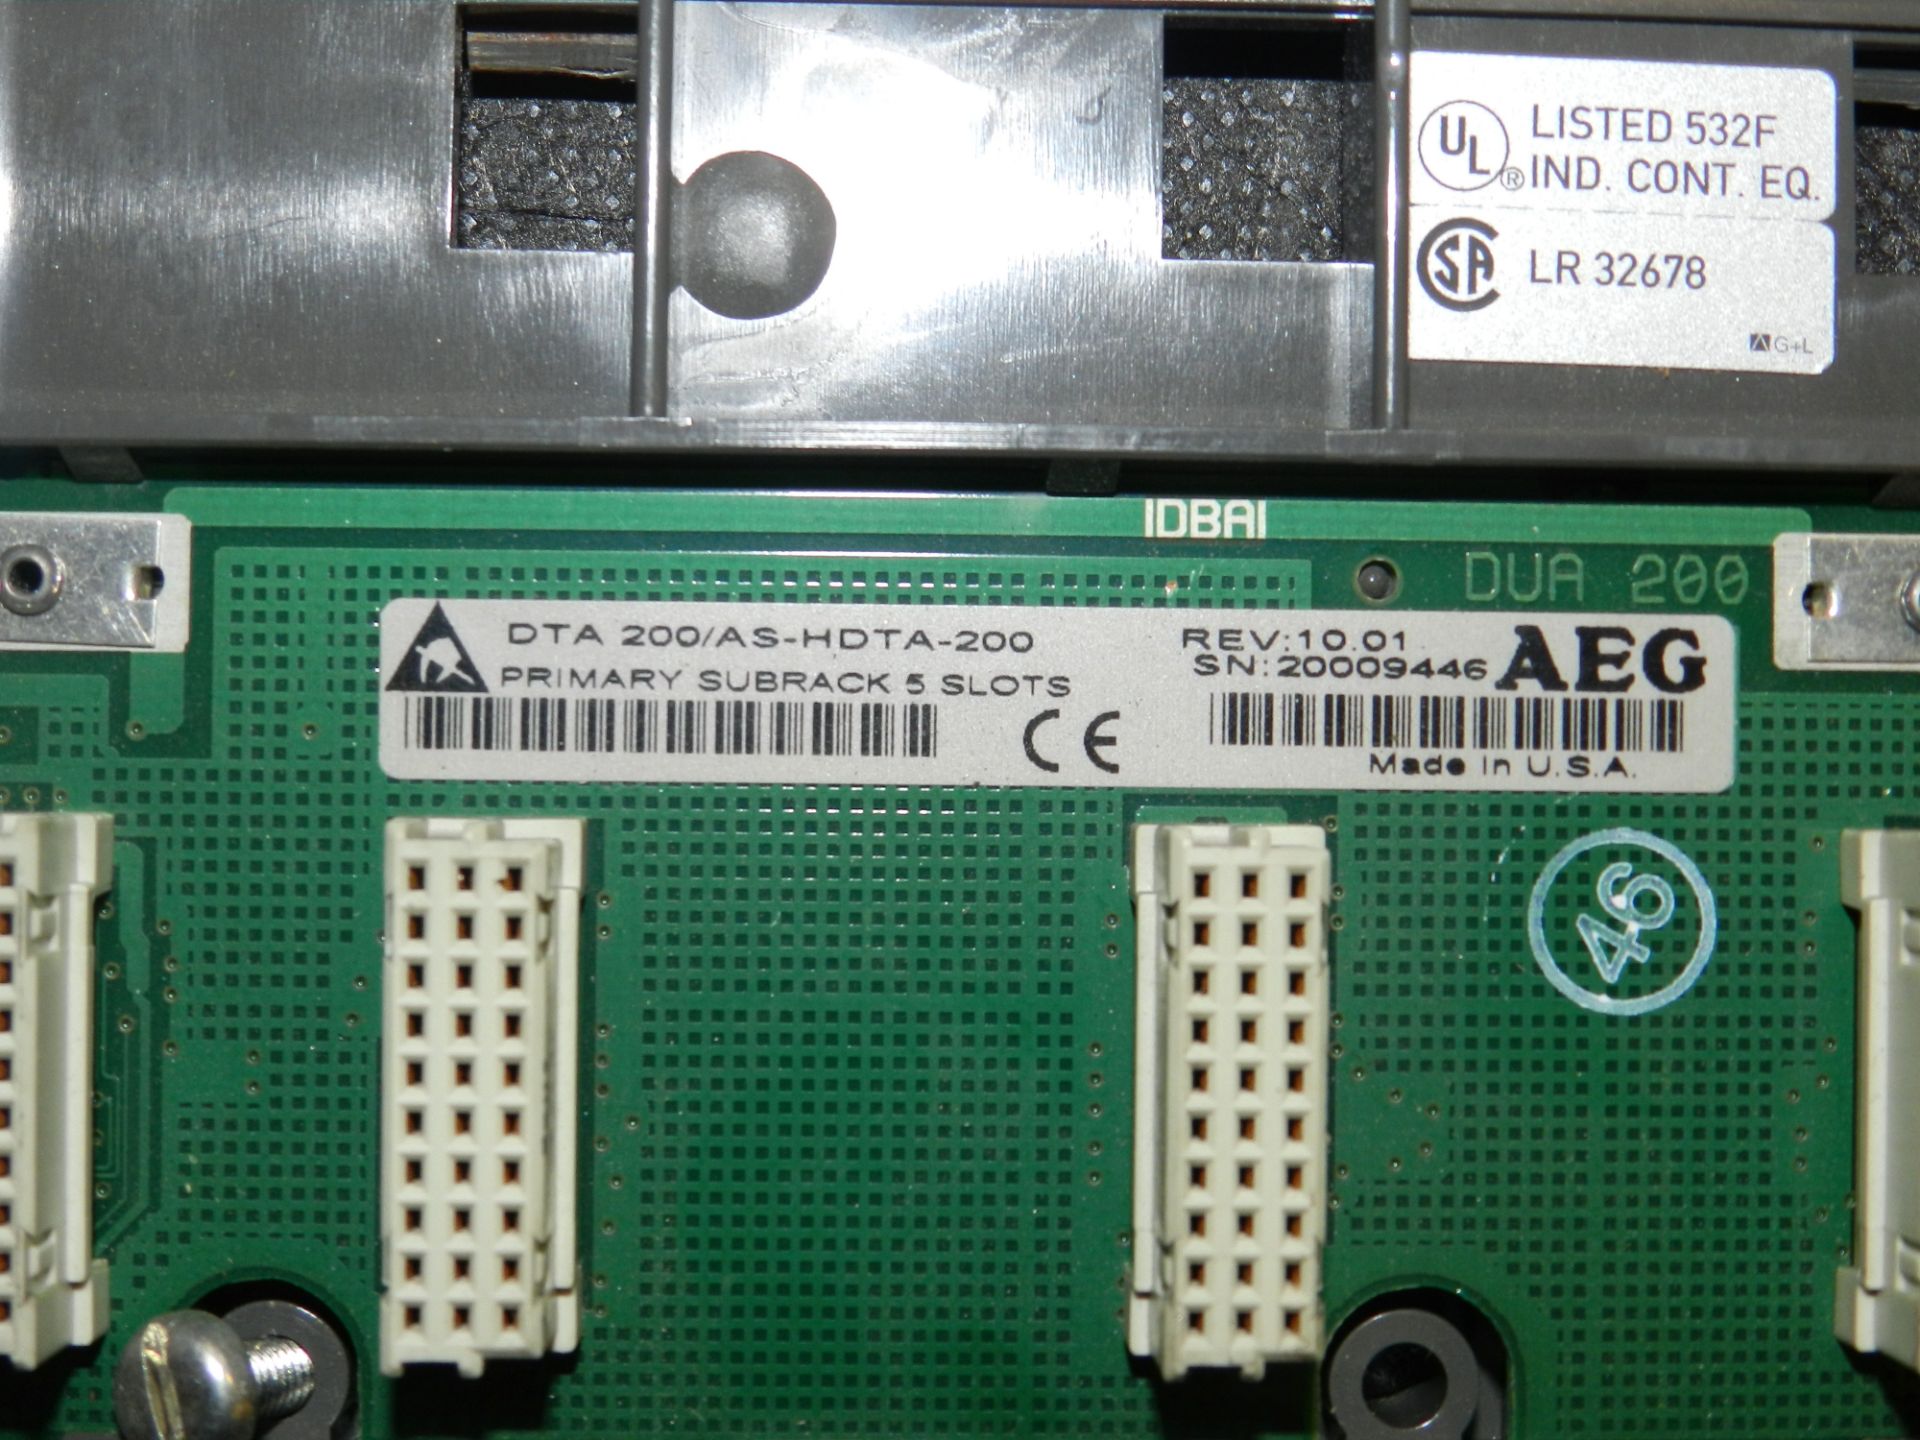 AEG Modicon PC-A984-145 CPU I/O PLC Assembly Rack - Image 7 of 11